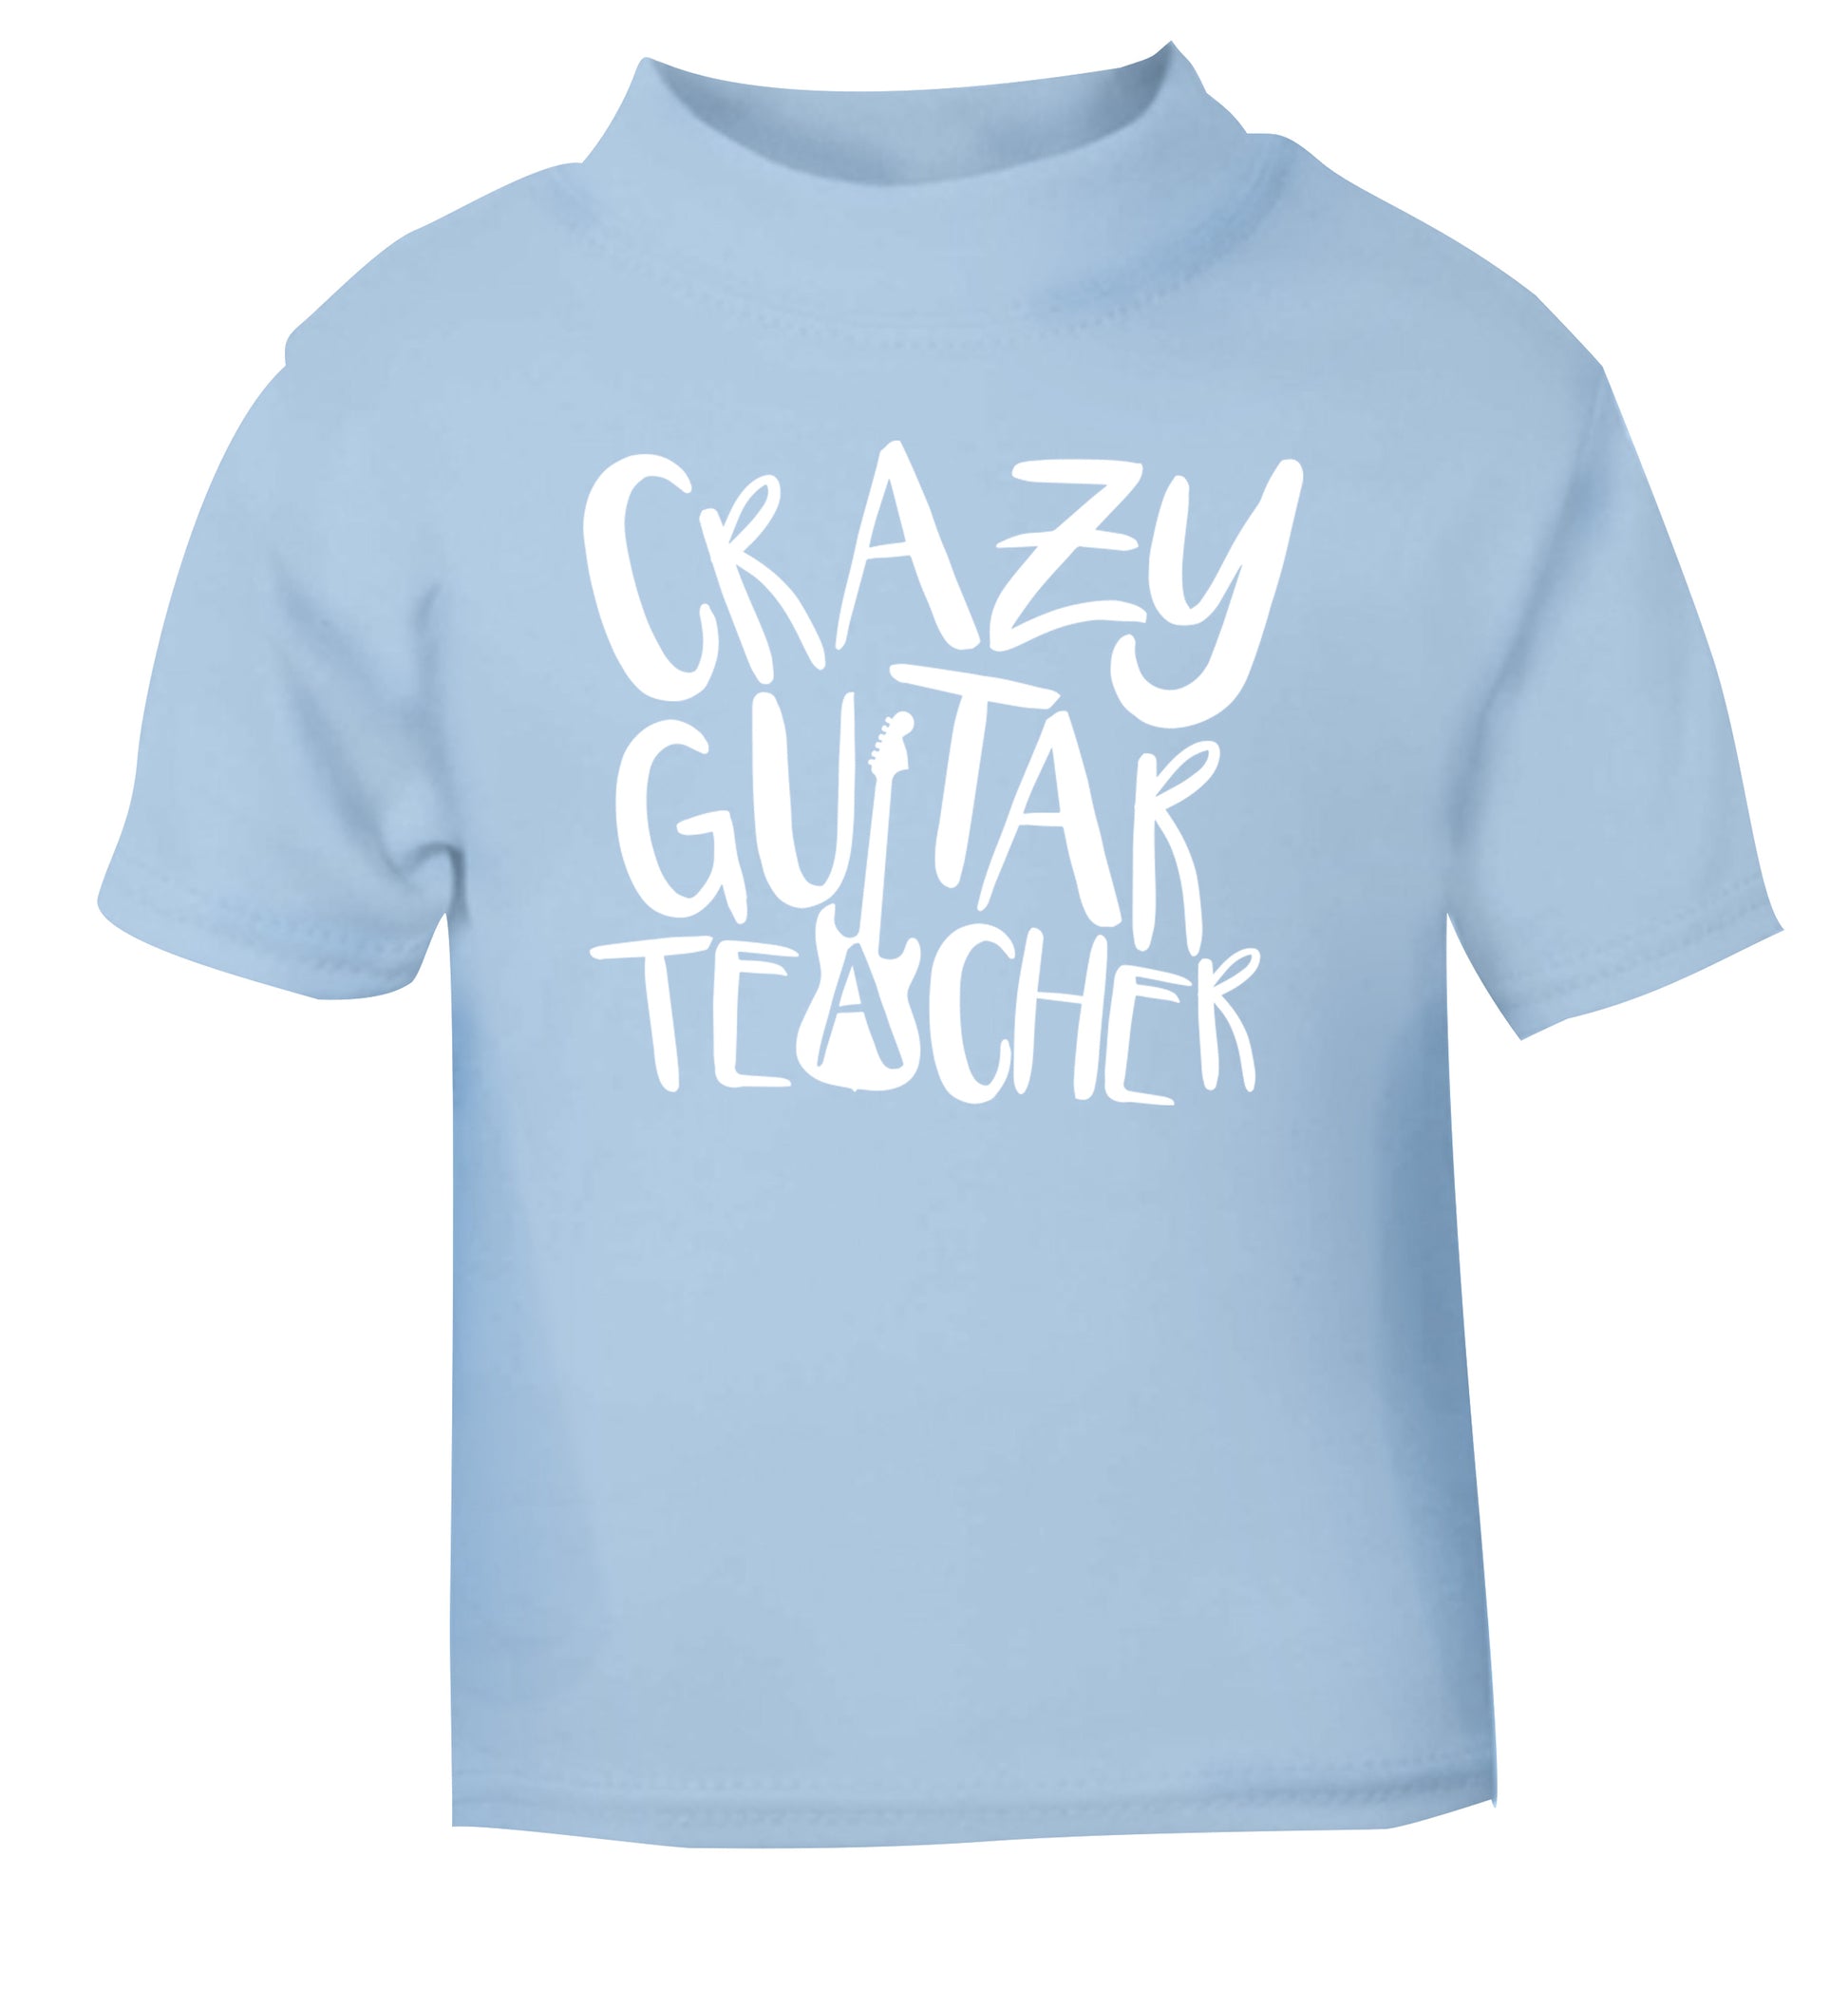 Crazy guitar teacher light blue Baby Toddler Tshirt 2 Years